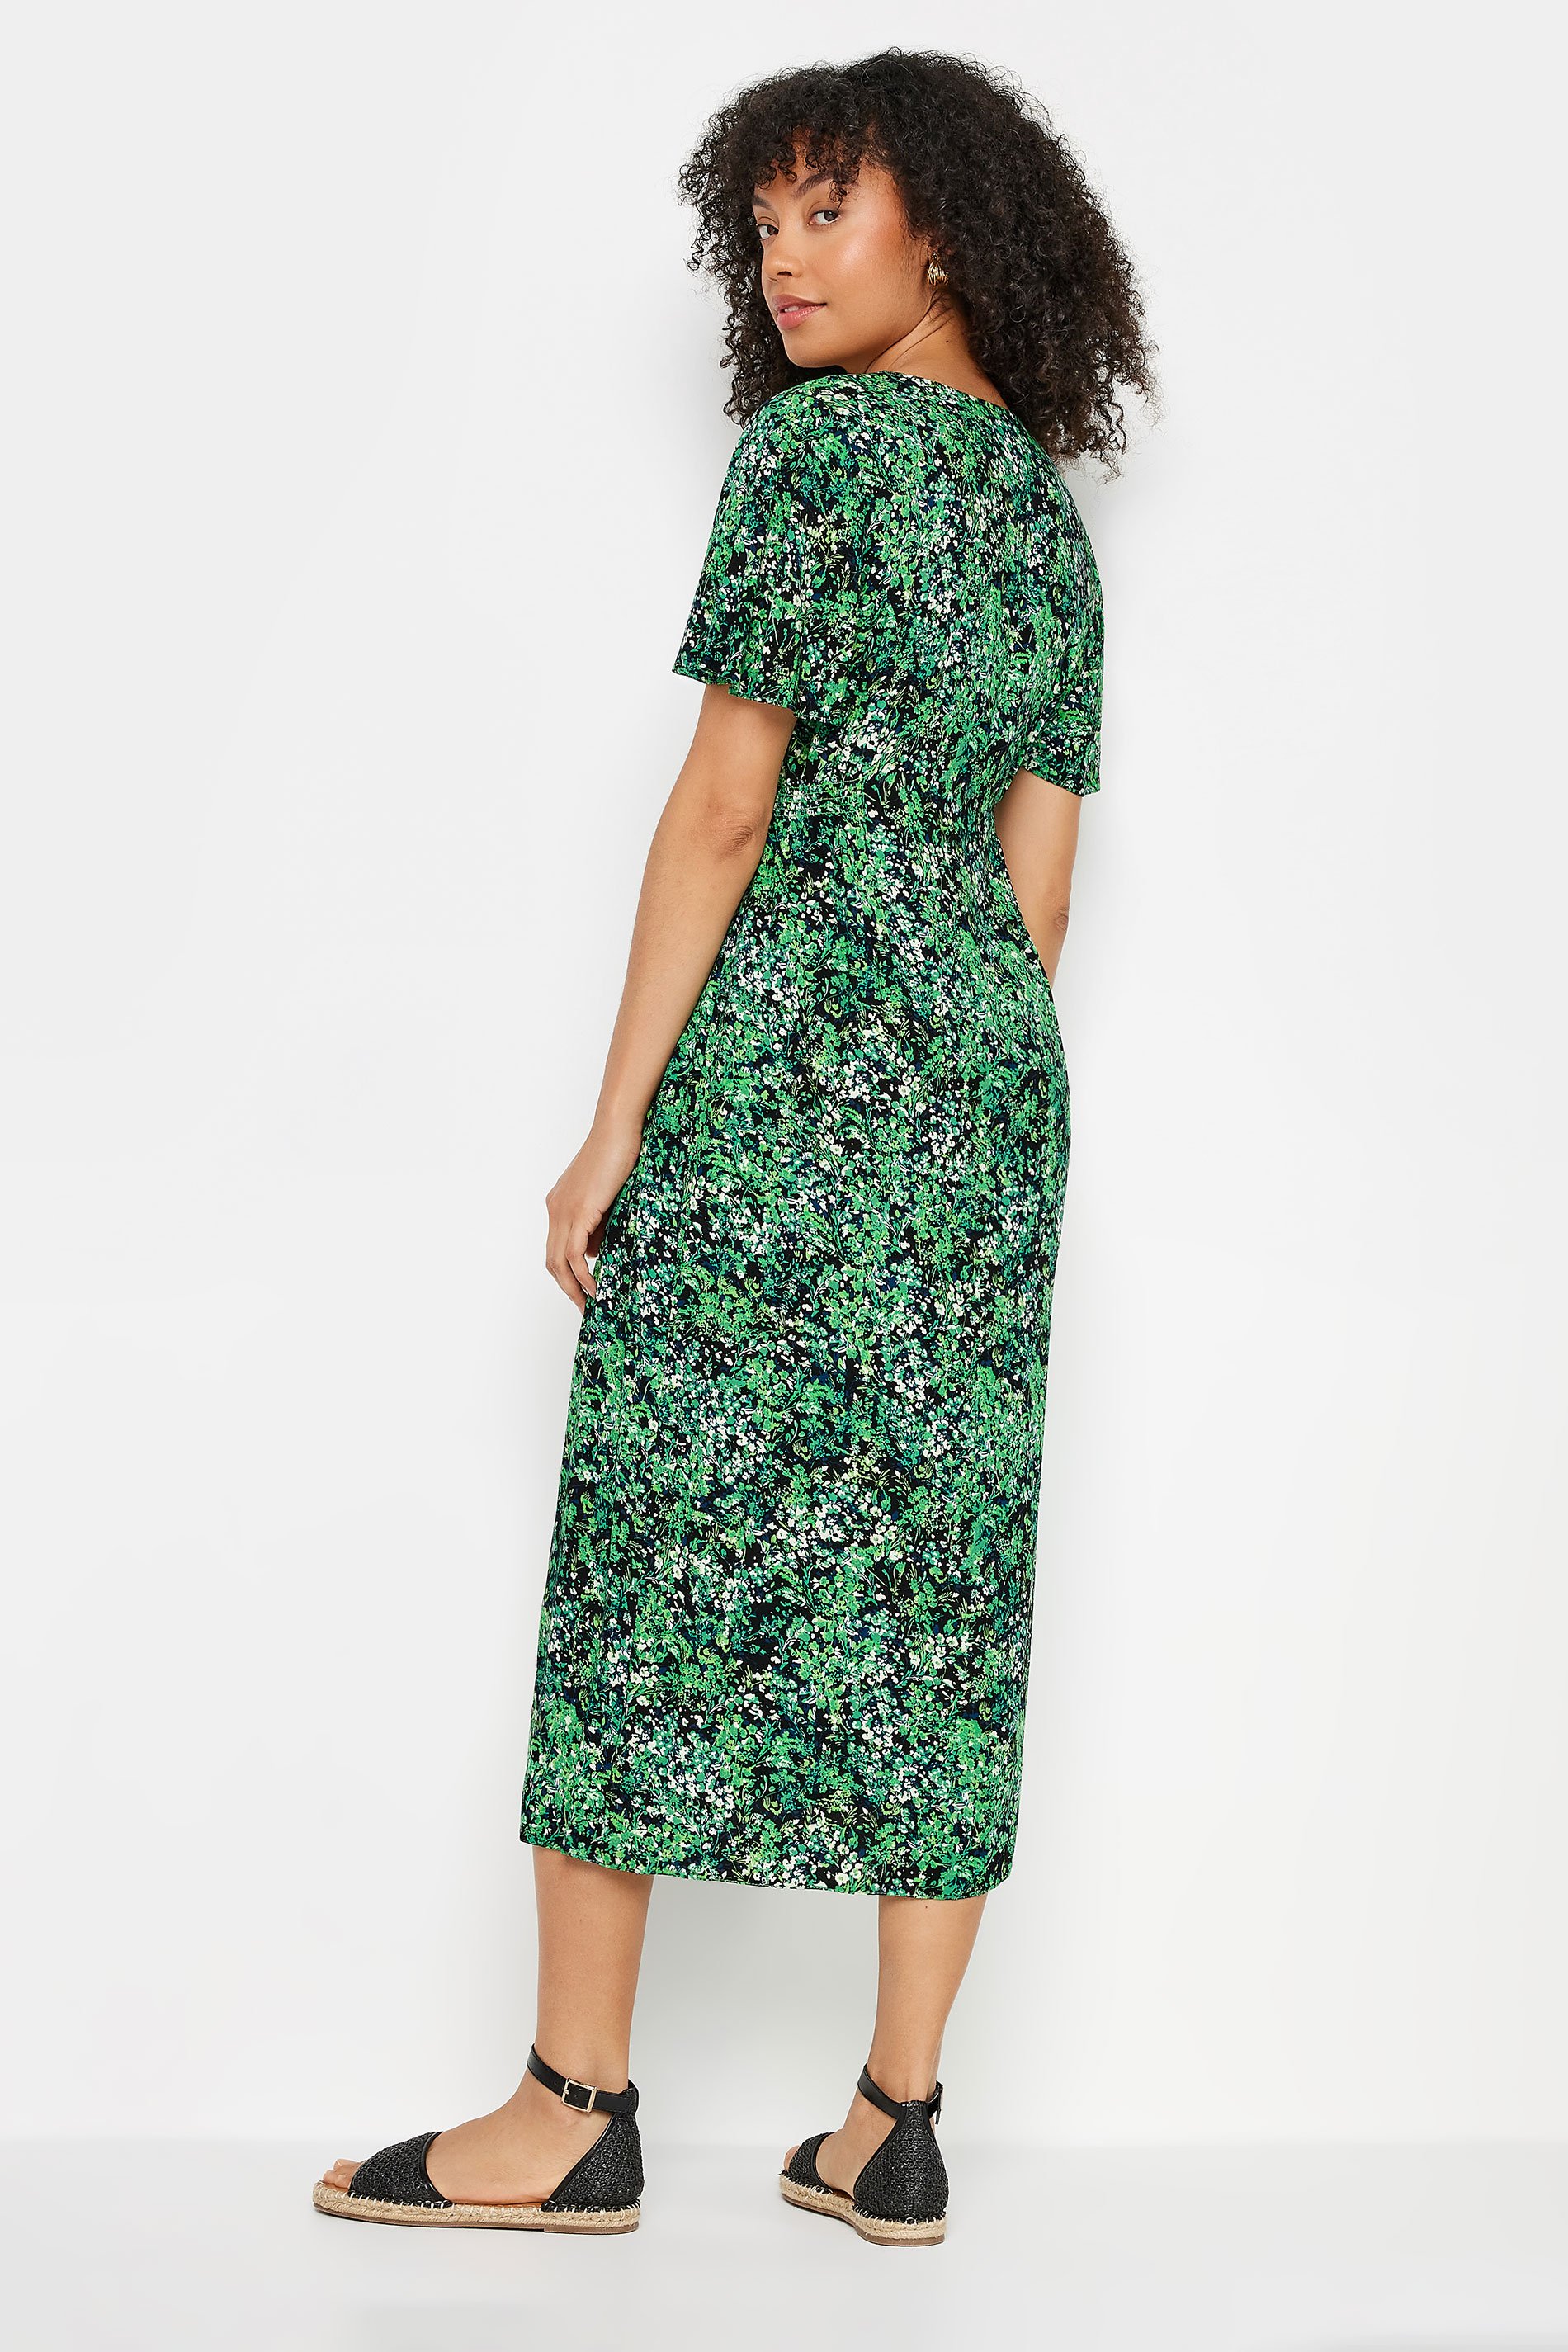 M&Co Green Floral Print Button Through Midi Tea Dress | M&Co 3